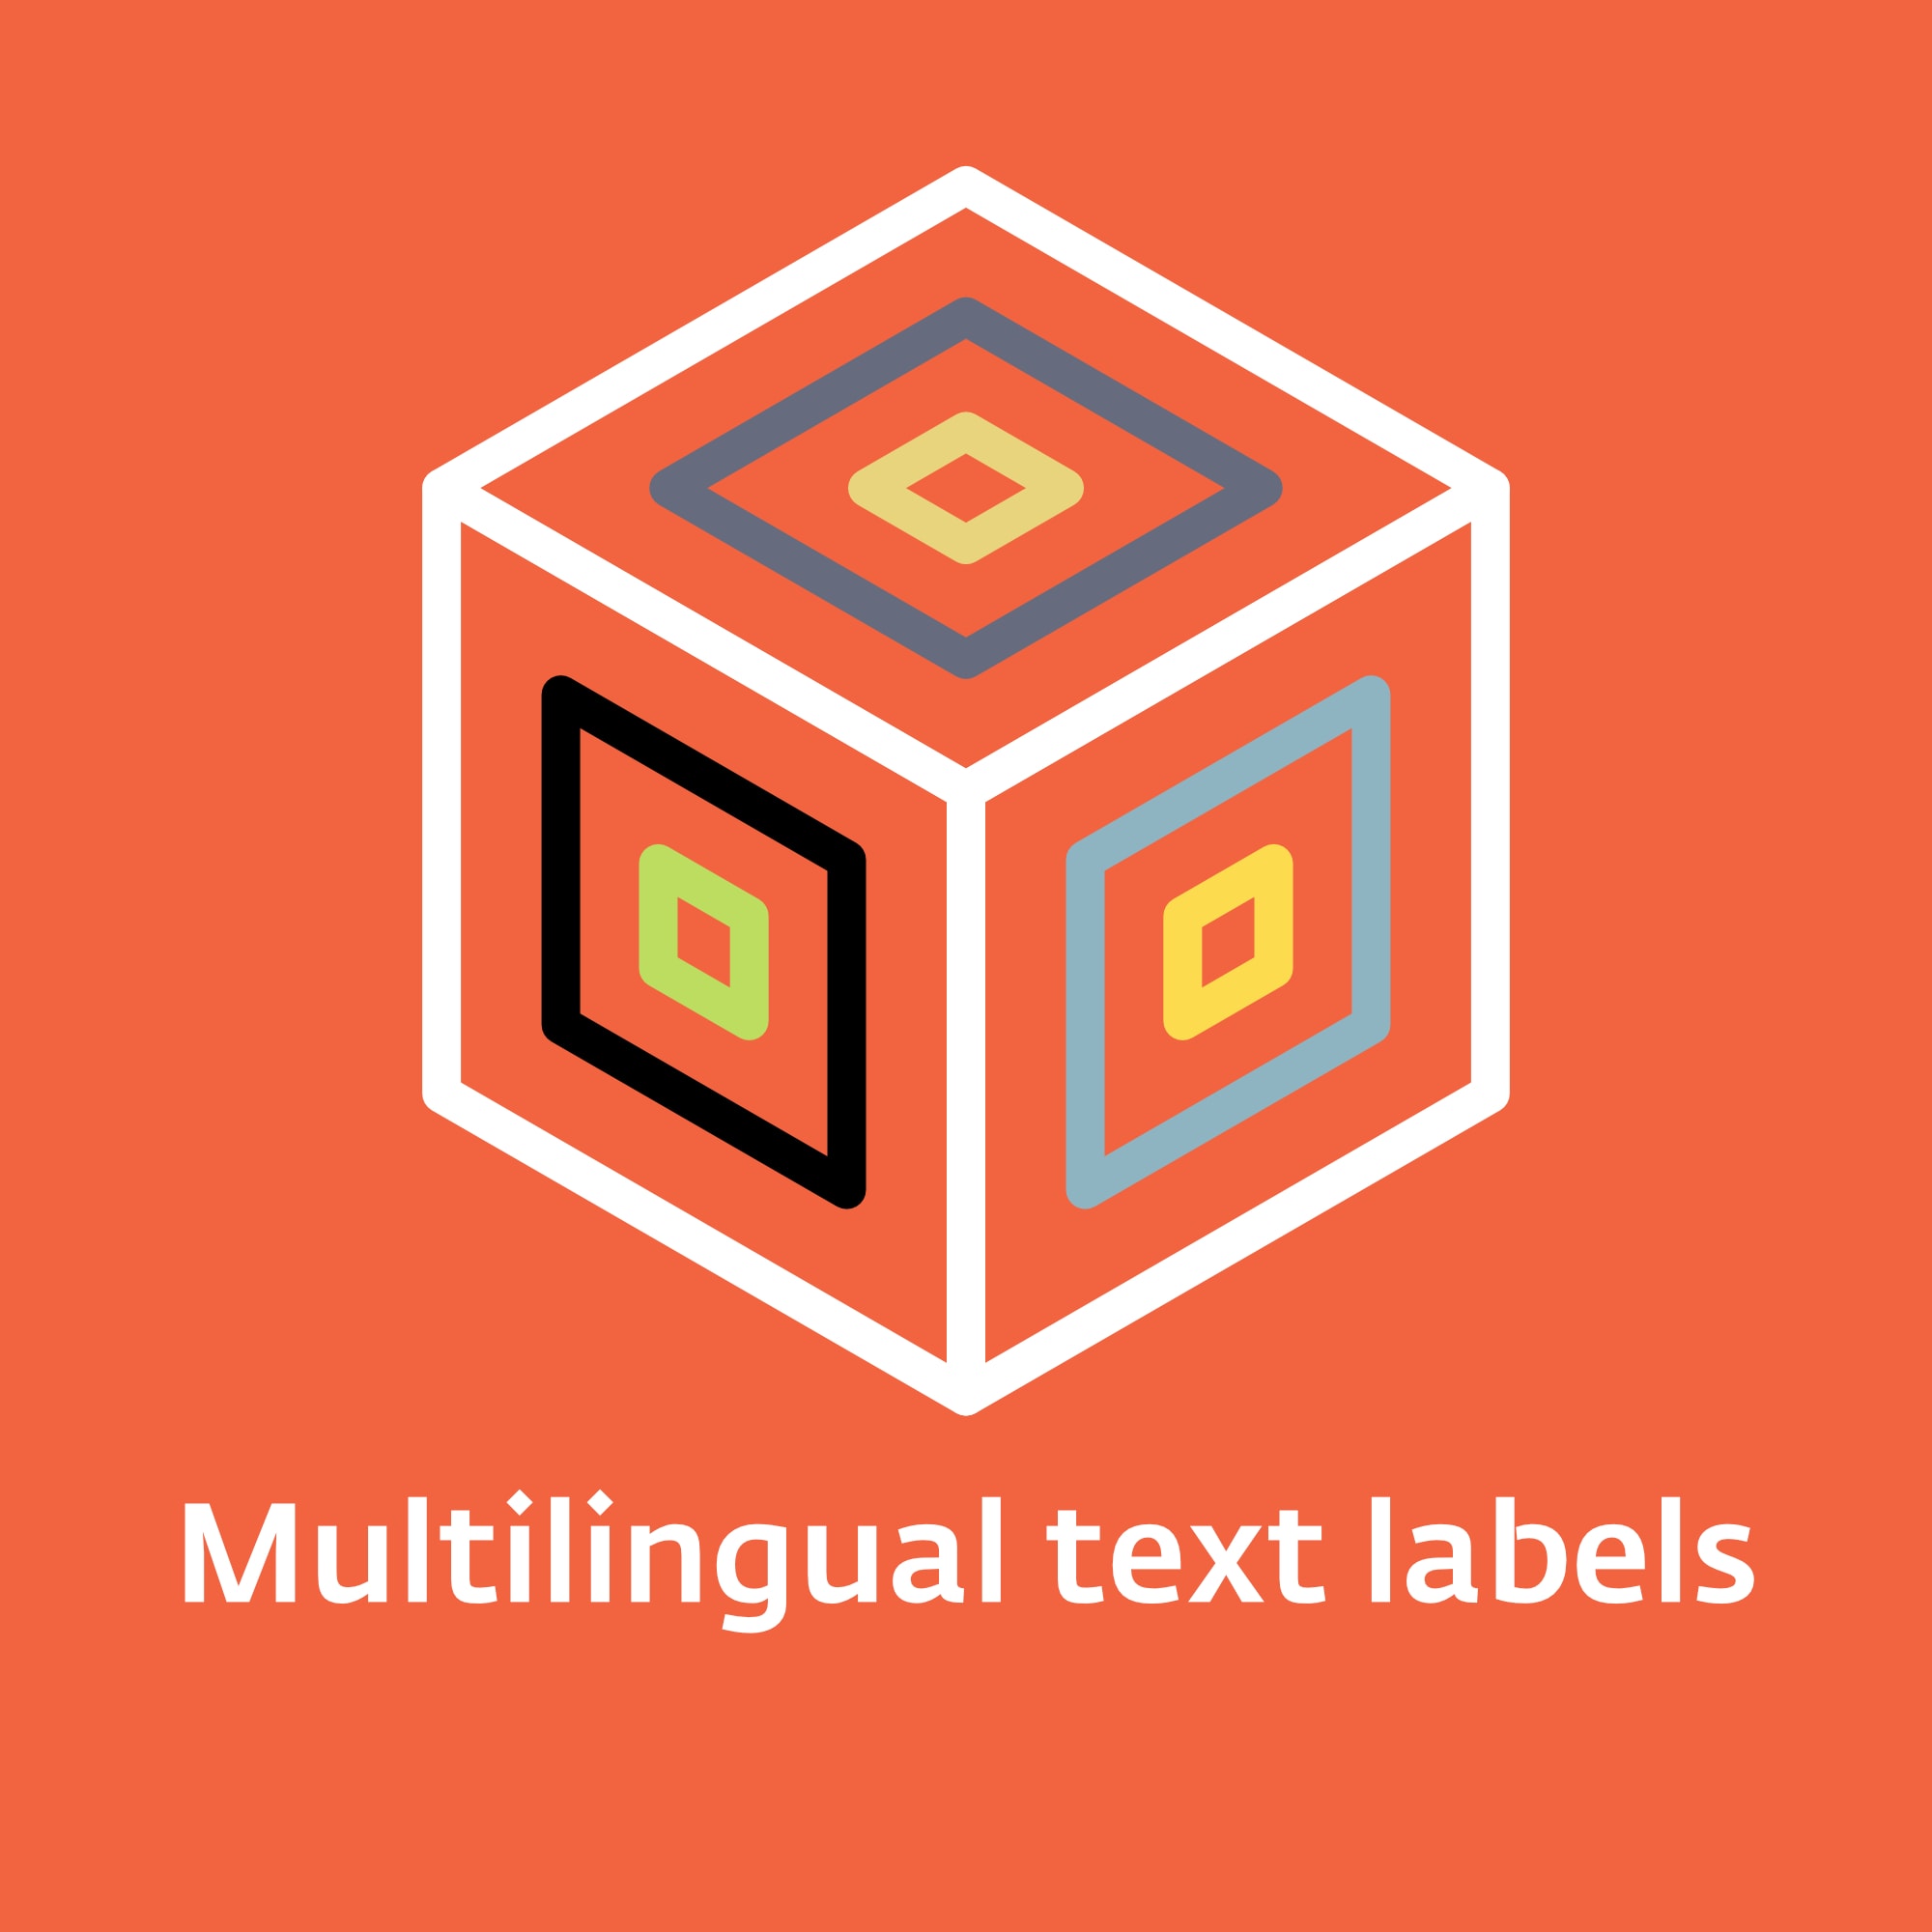 Multilingual text labels